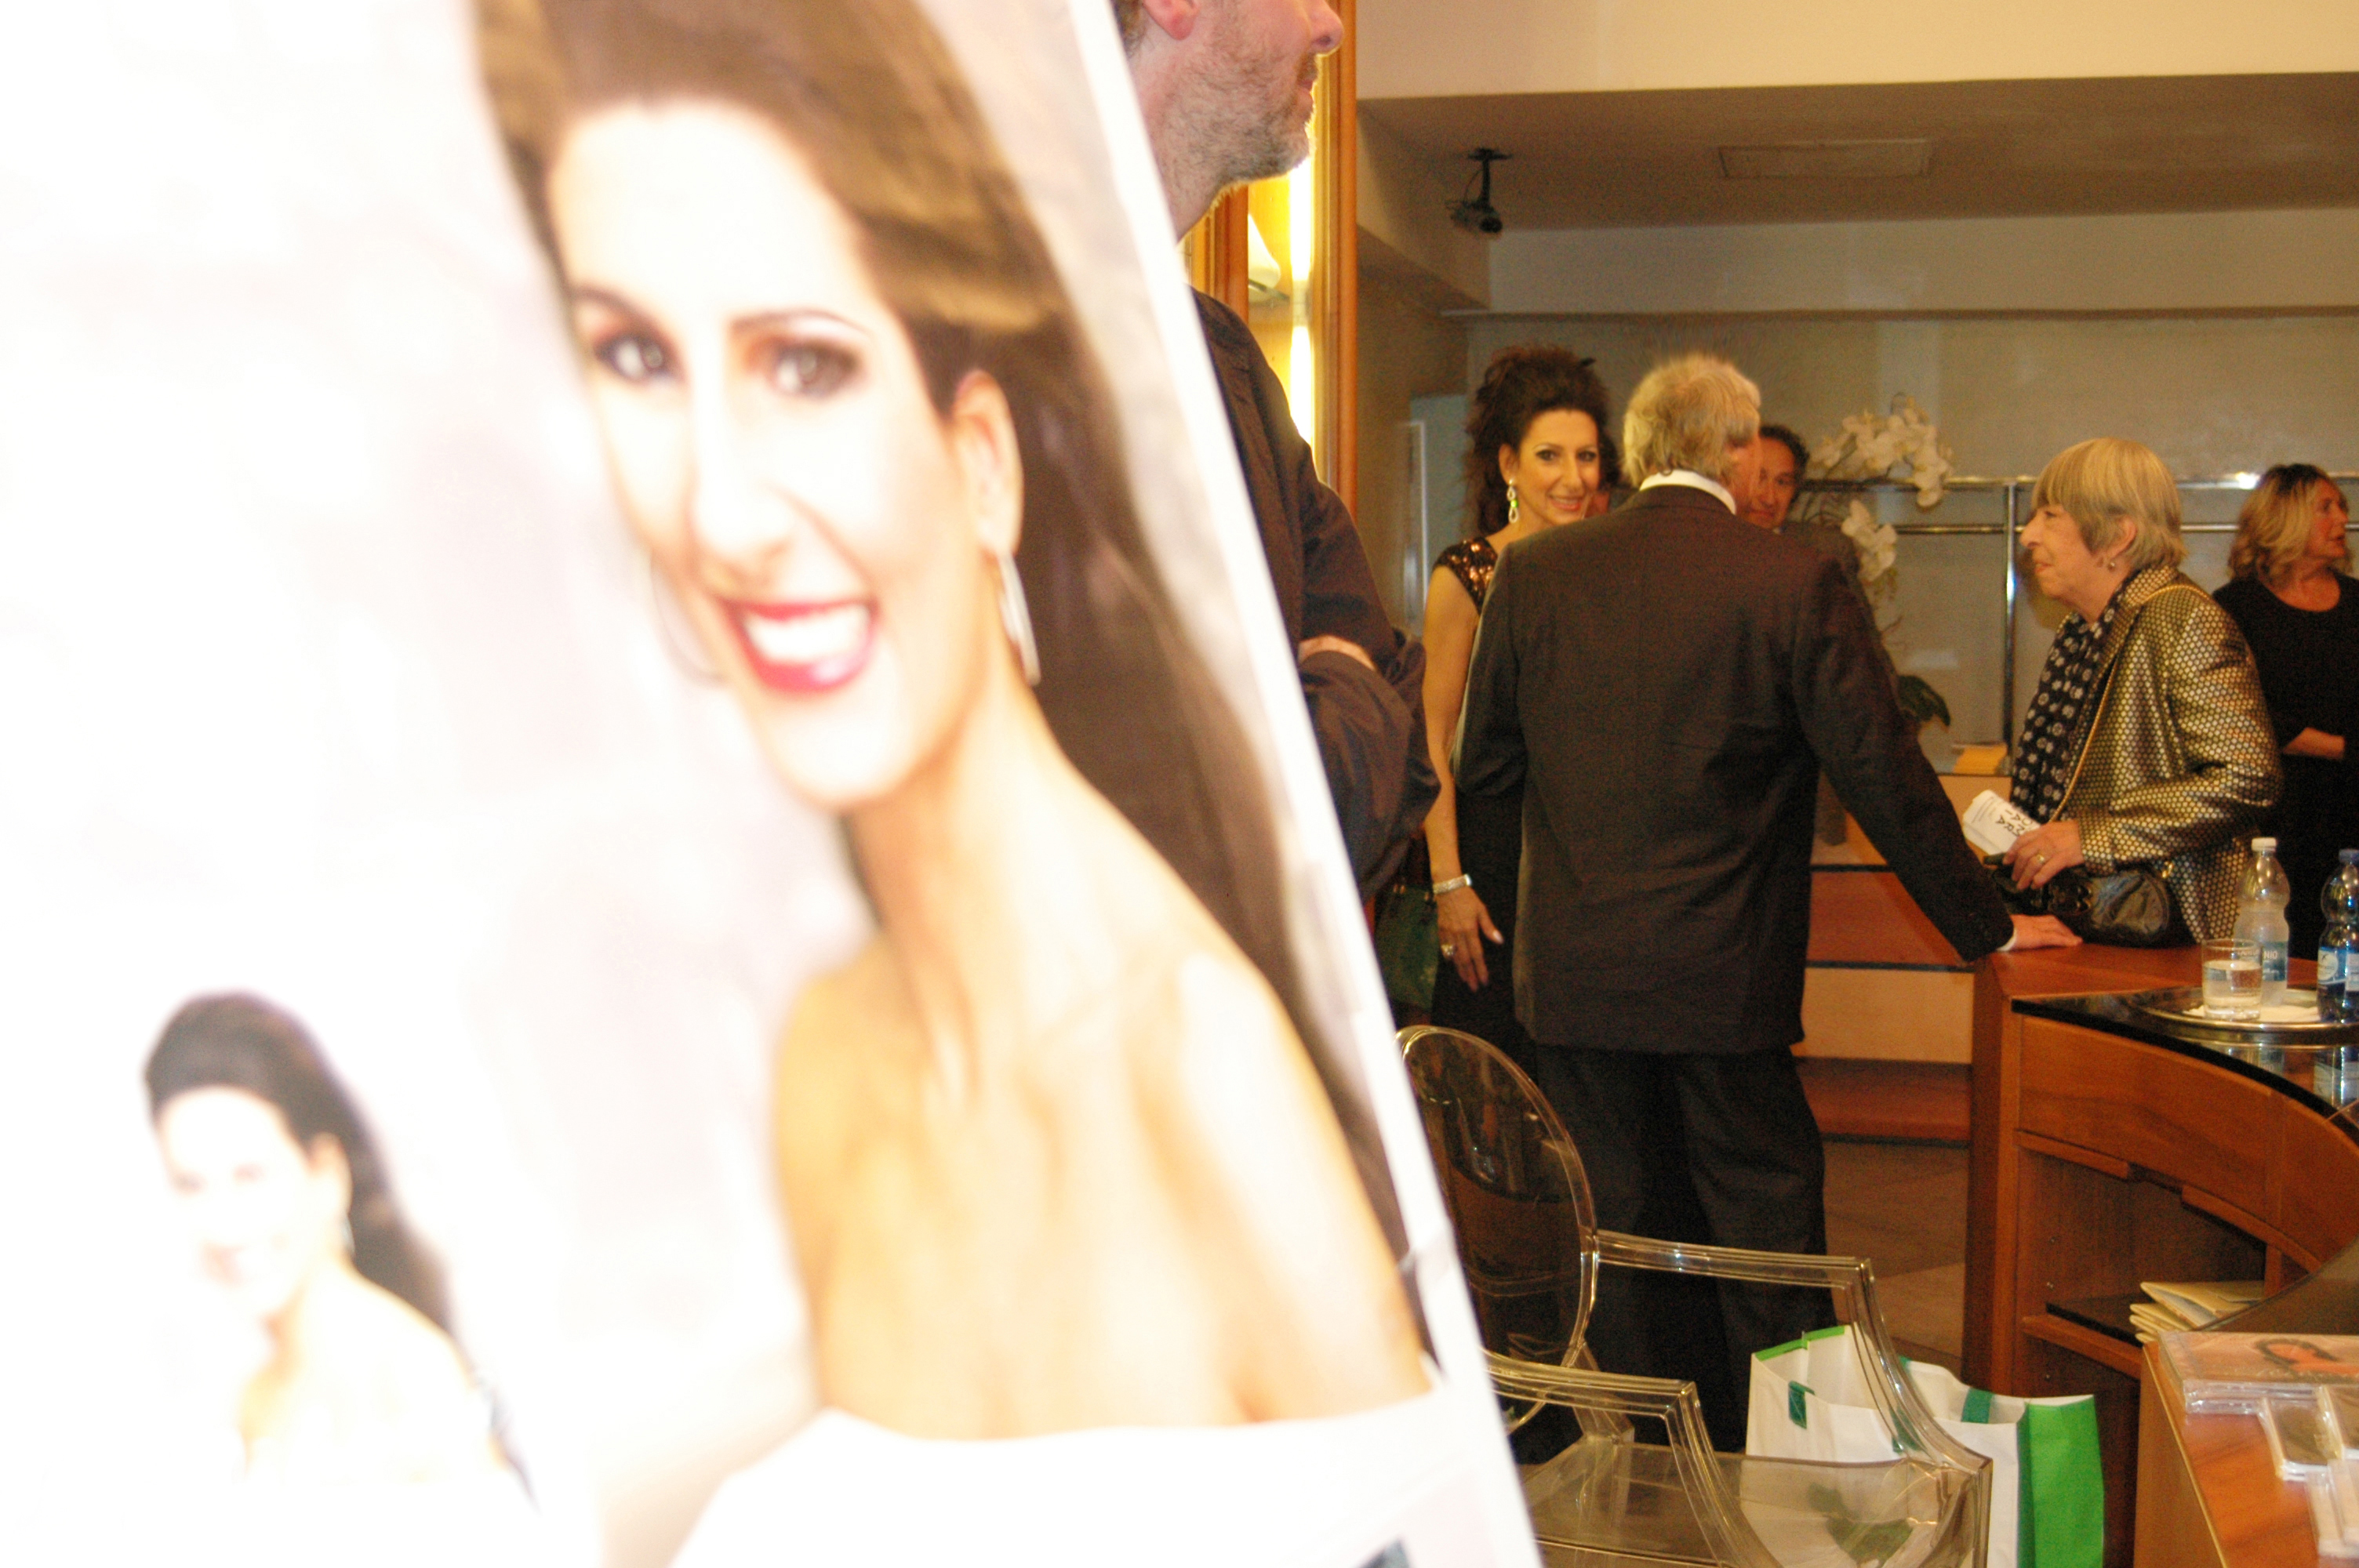 Lucia Aliberti⚘Auditorium⚘Milan⚘Concert⚘Autograph Session⚘Fans⚘Escada Fashion⚘:http://www.luciaaliberti.it #luciaaliberti #auditorium #milan #autographsession #fans #escadafashion